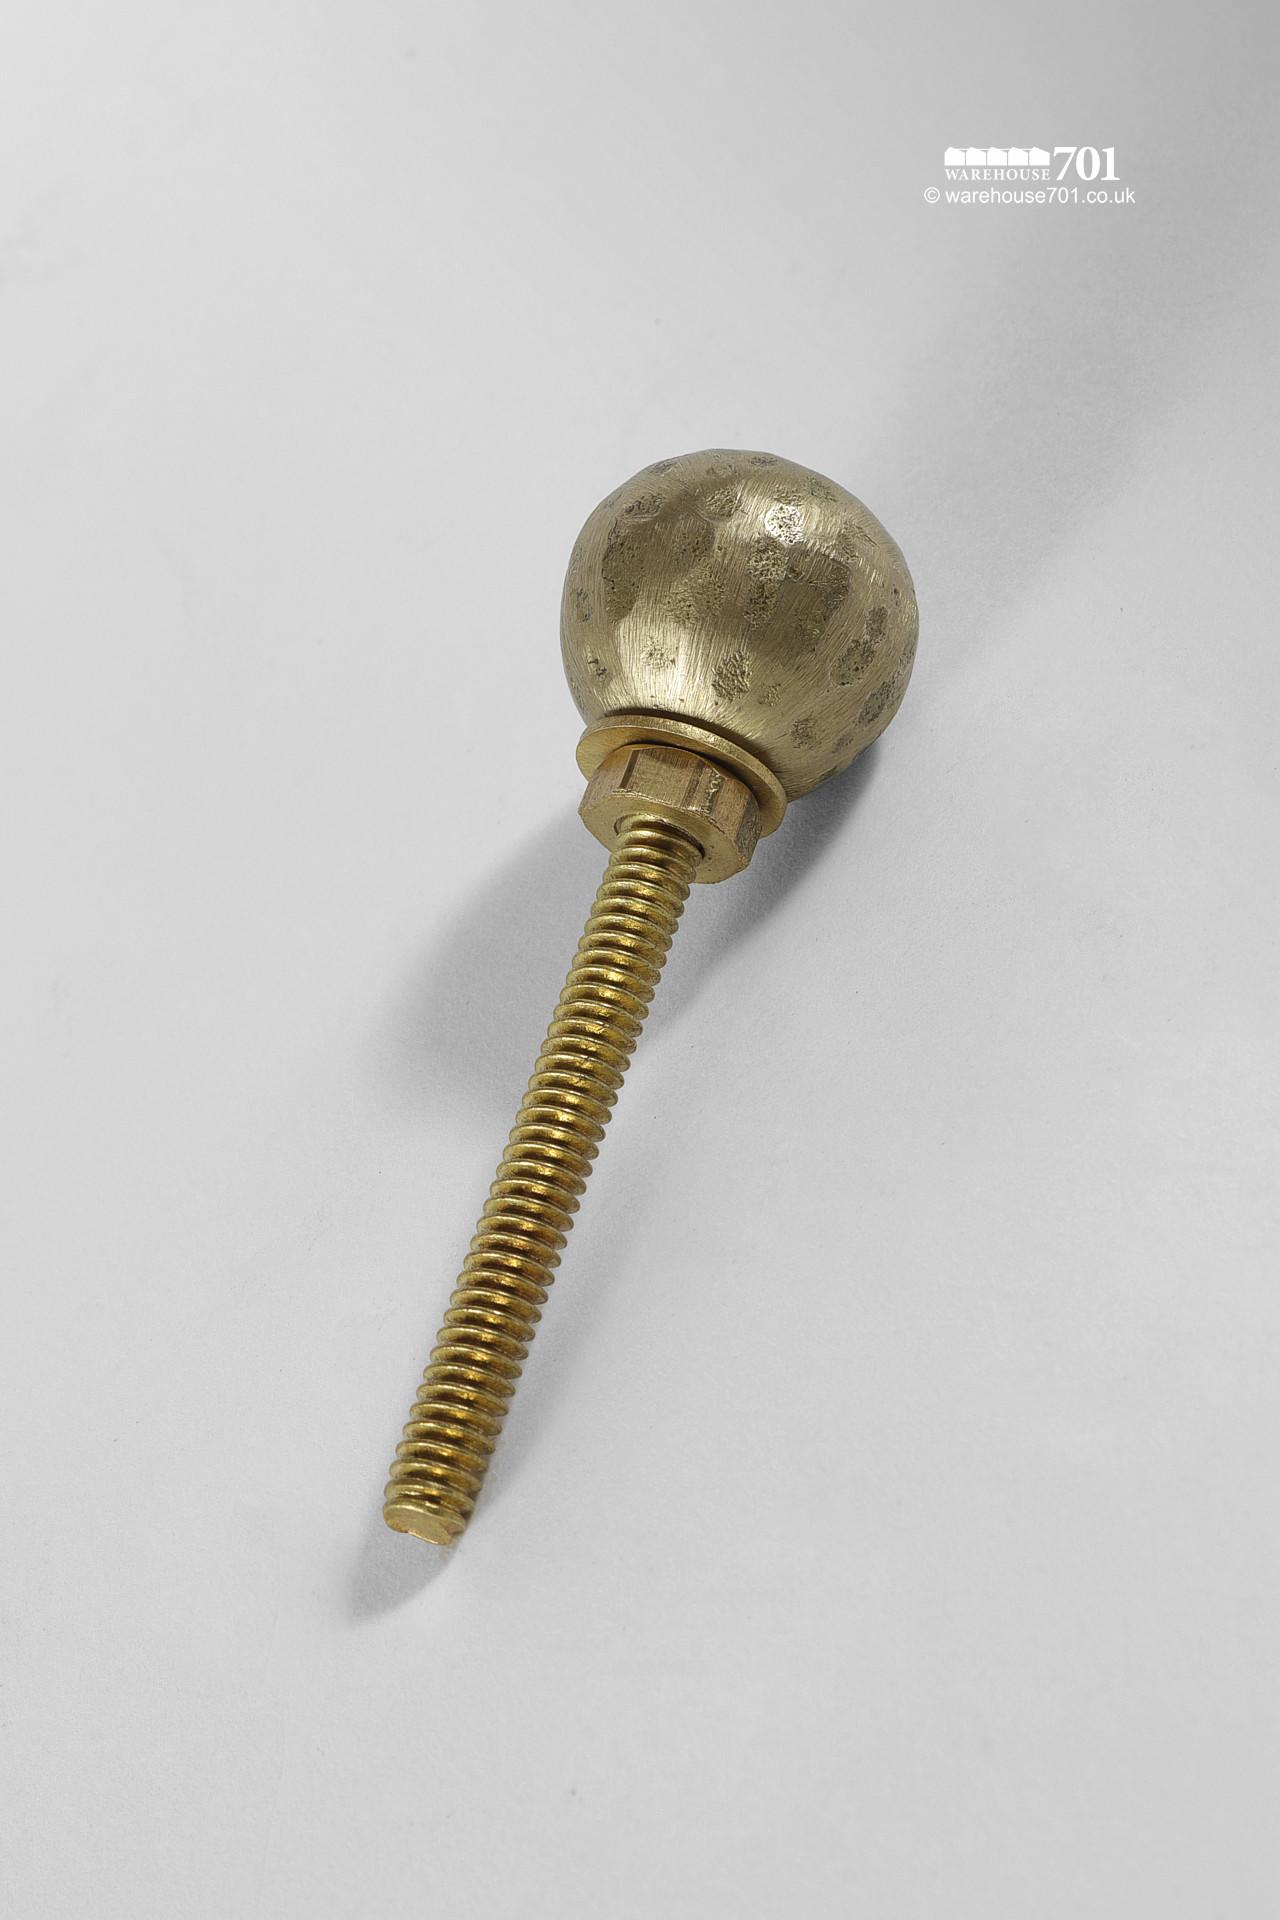 New Hammered Brass Ball Door or Drawer Knob #2